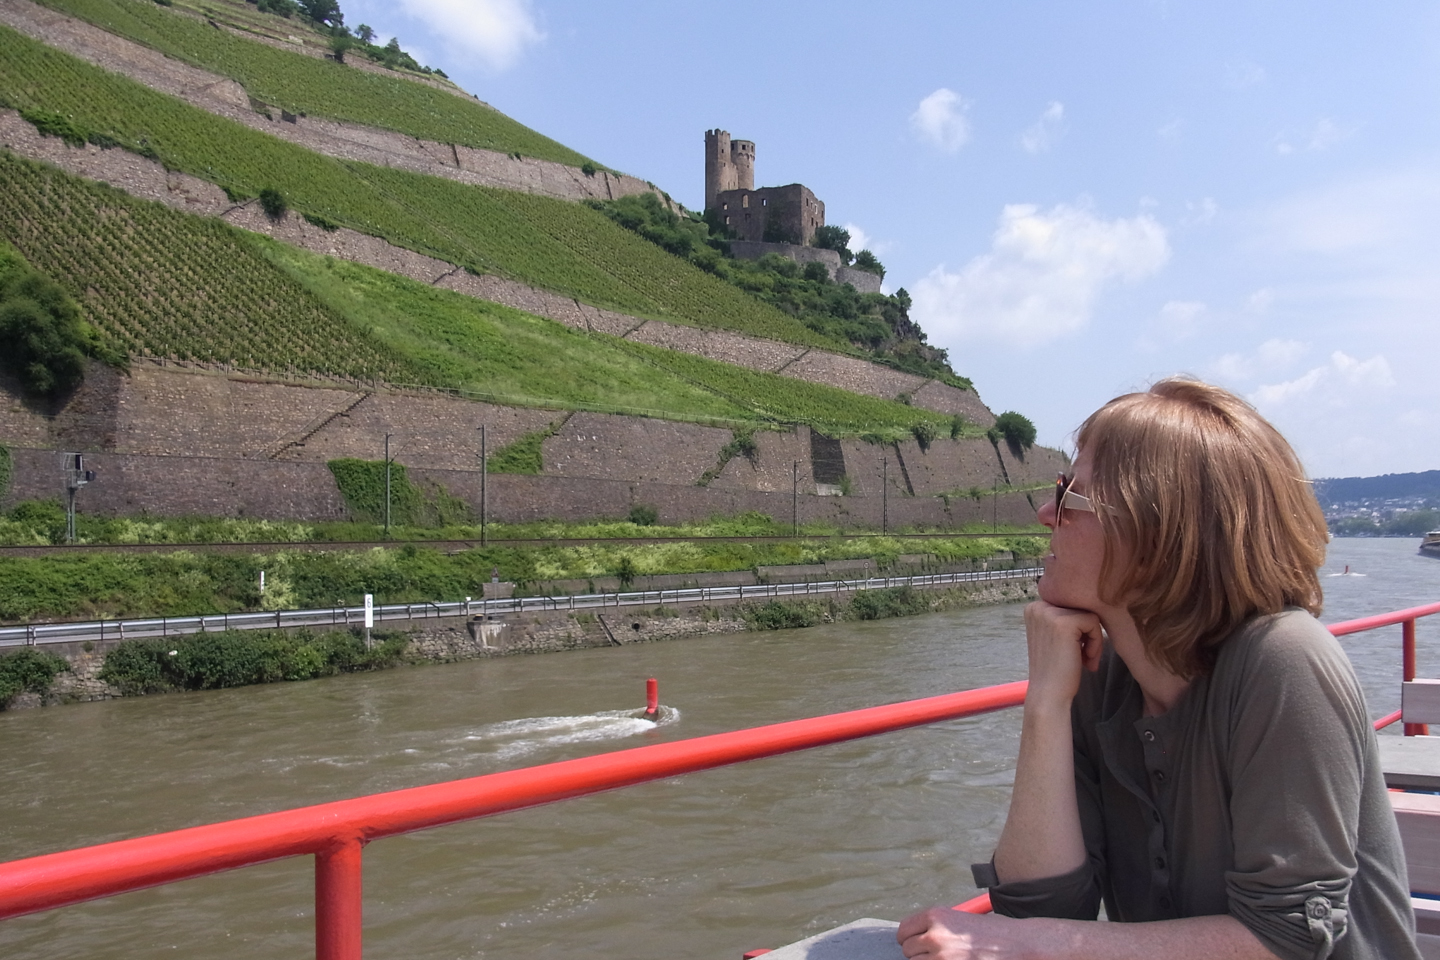 Prisca admiring the Ruins of Ehrenfels Castle